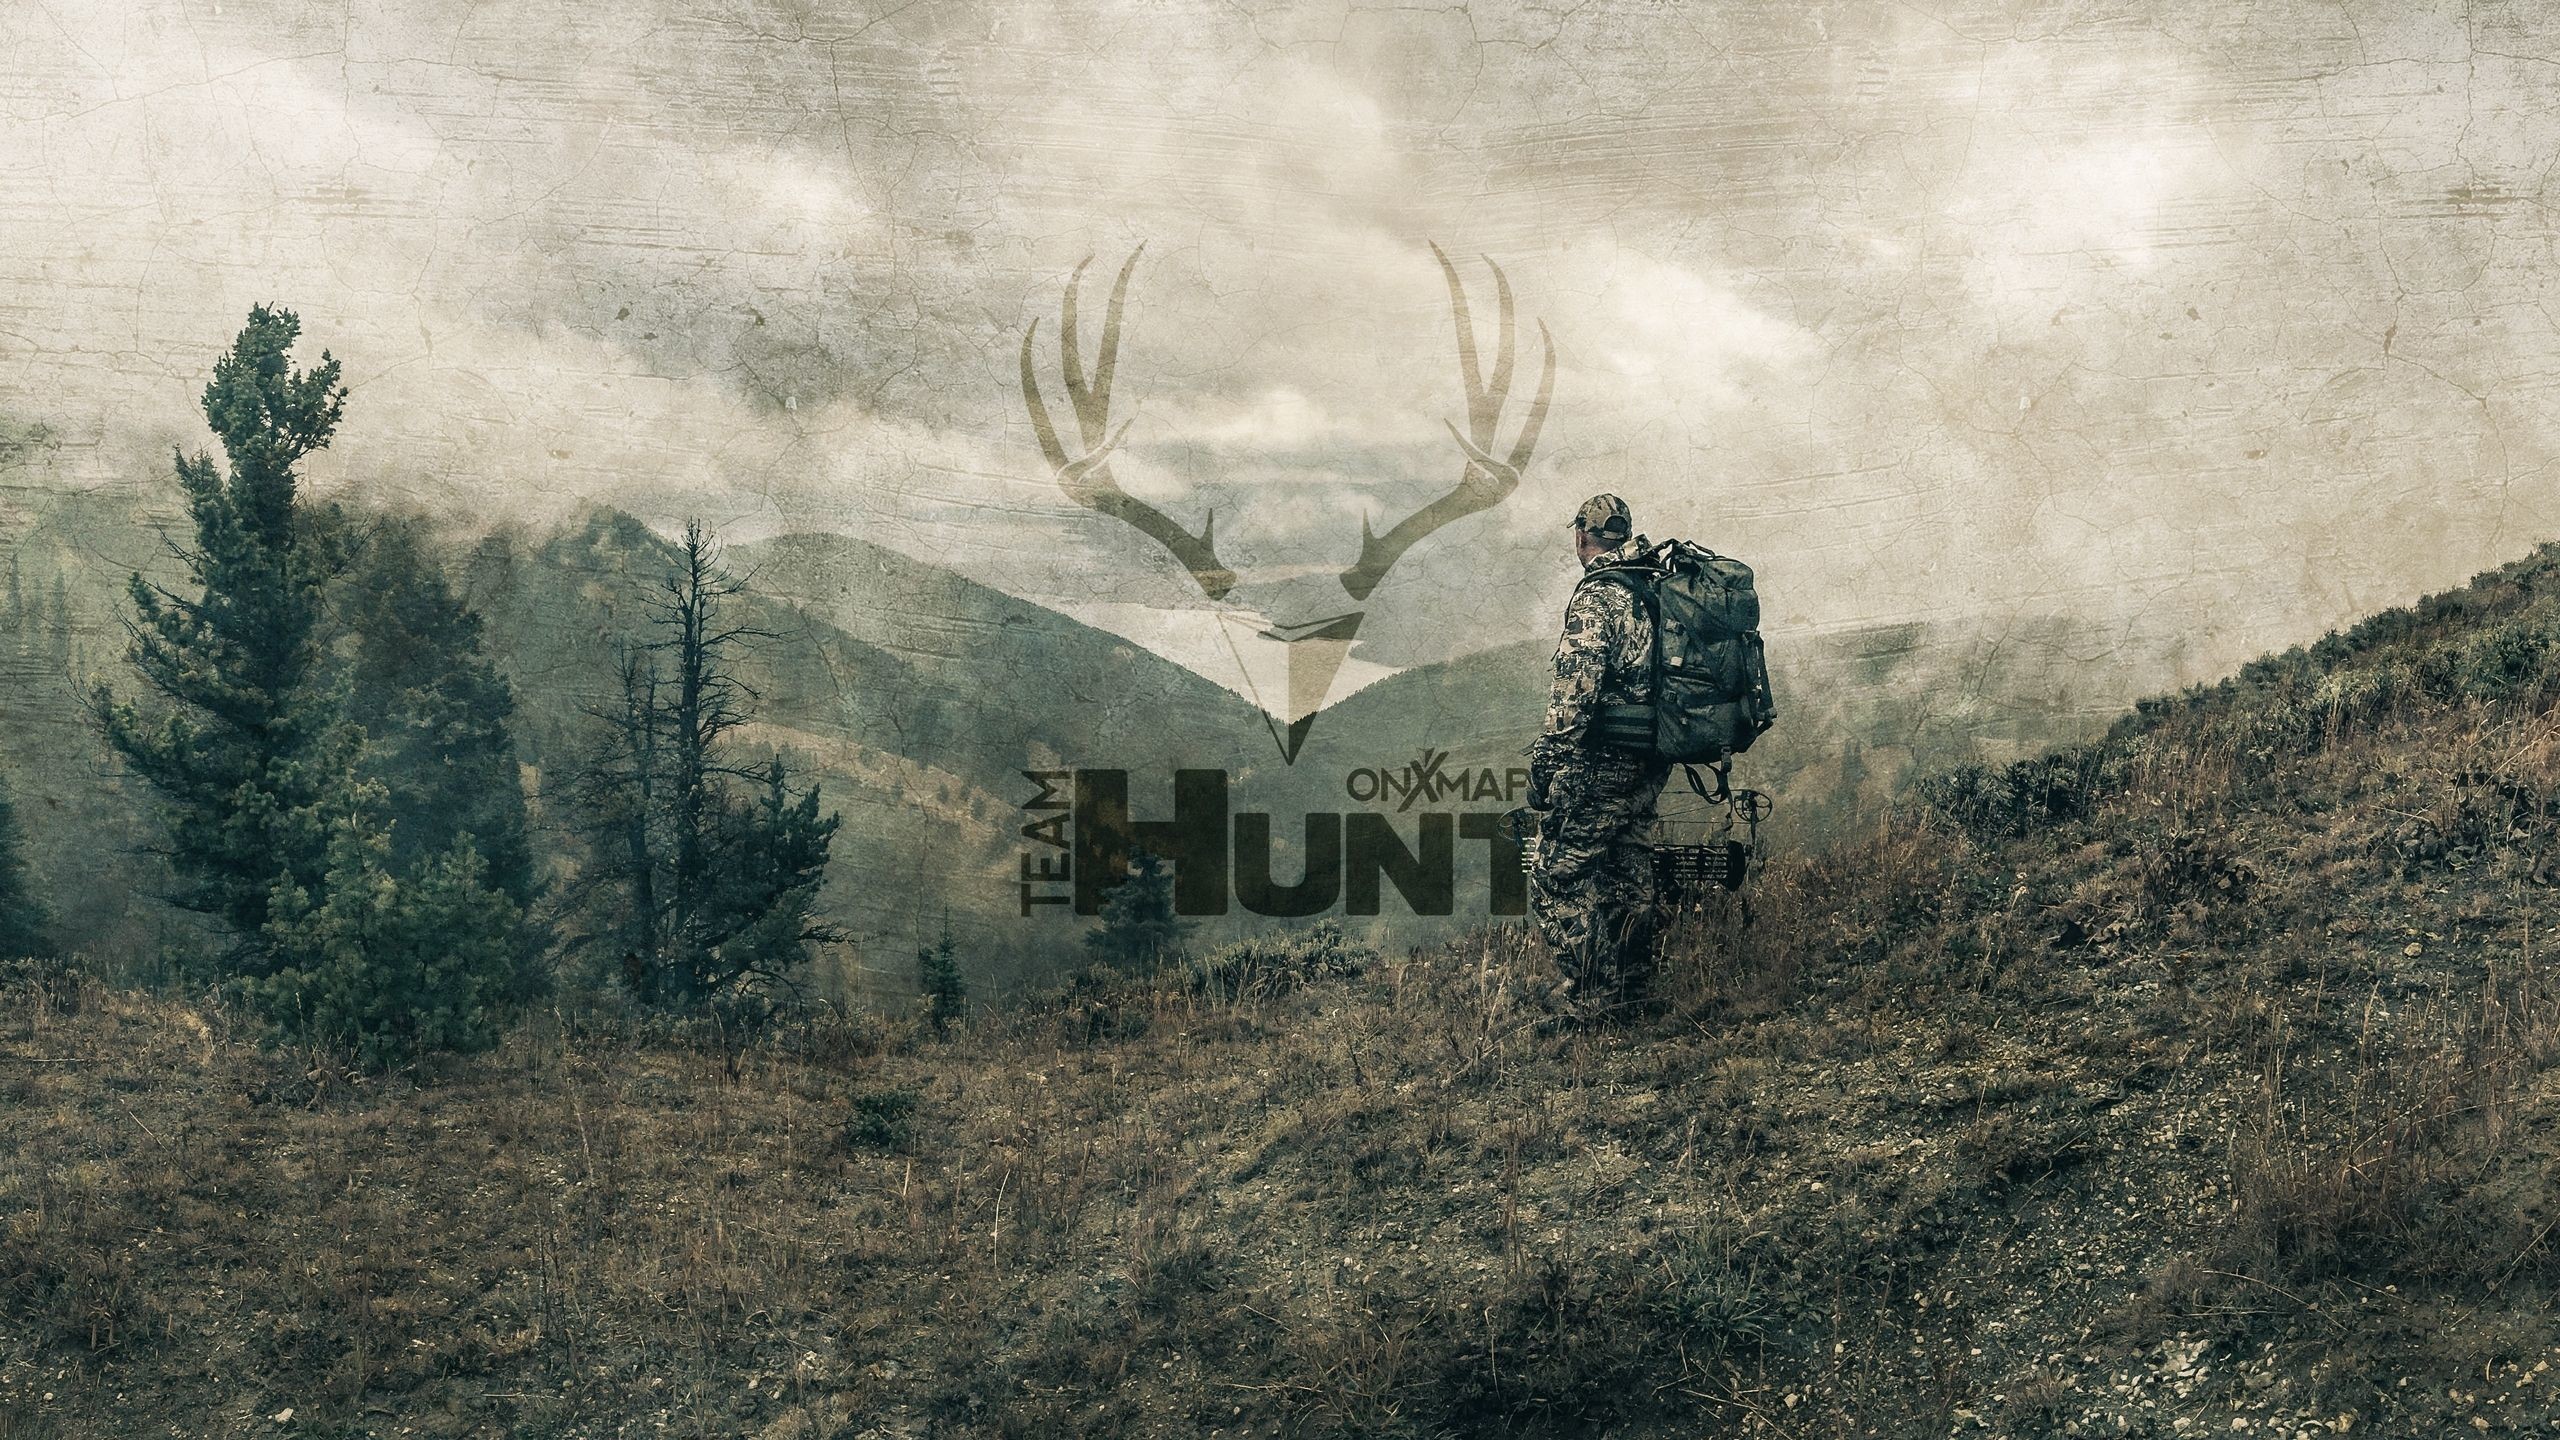 bowtech bow hunting wallpaper